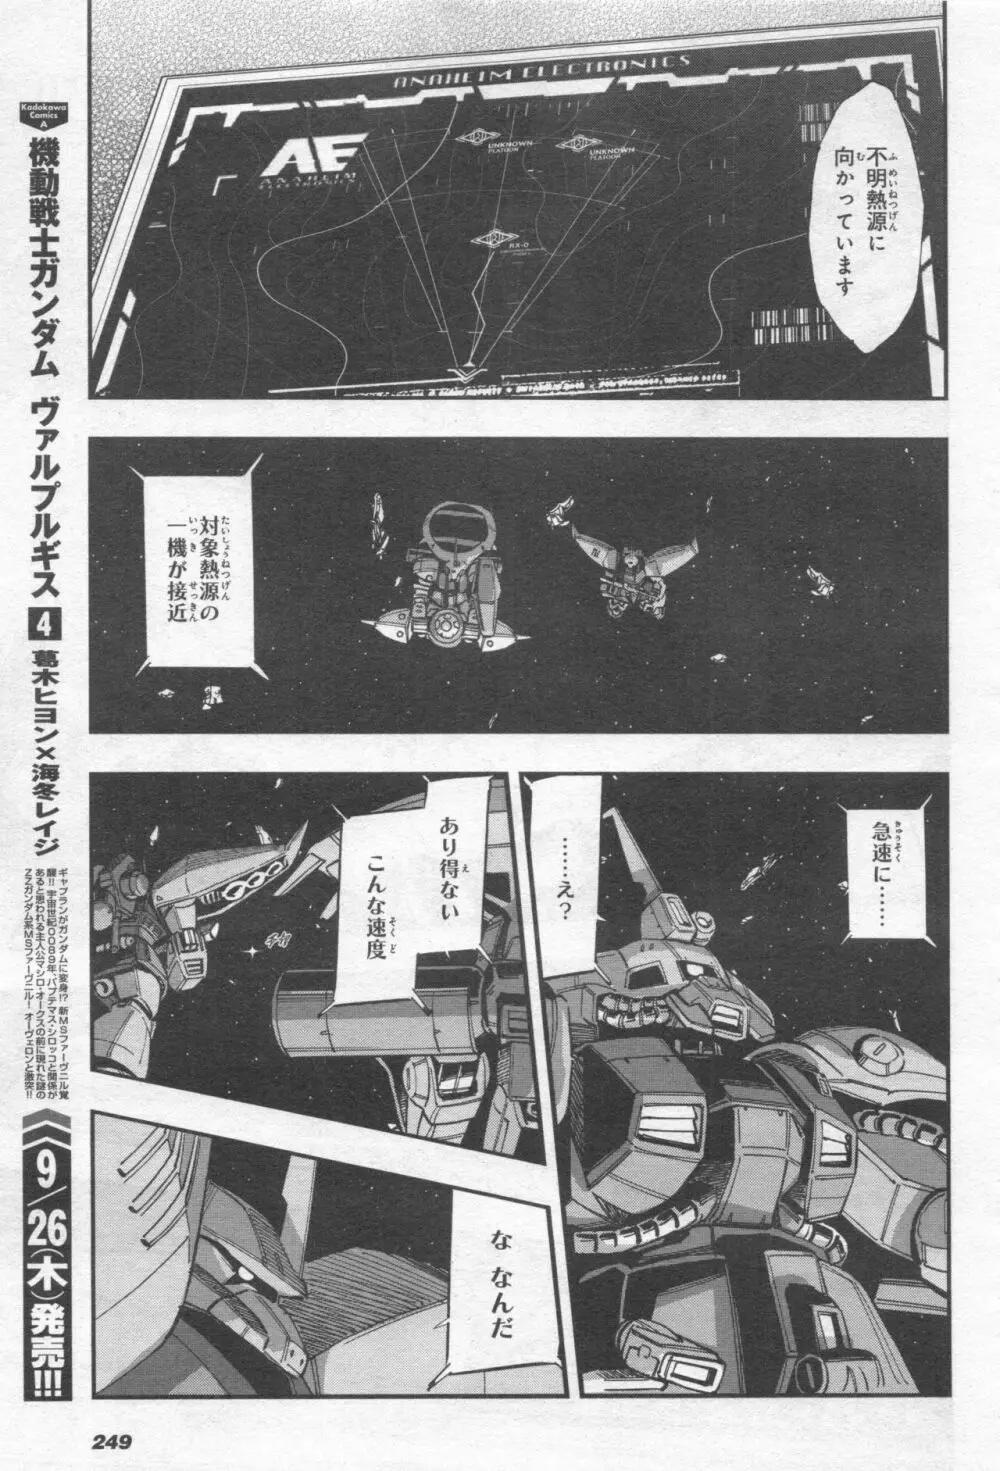 Gundam Ace – October 2019 252ページ